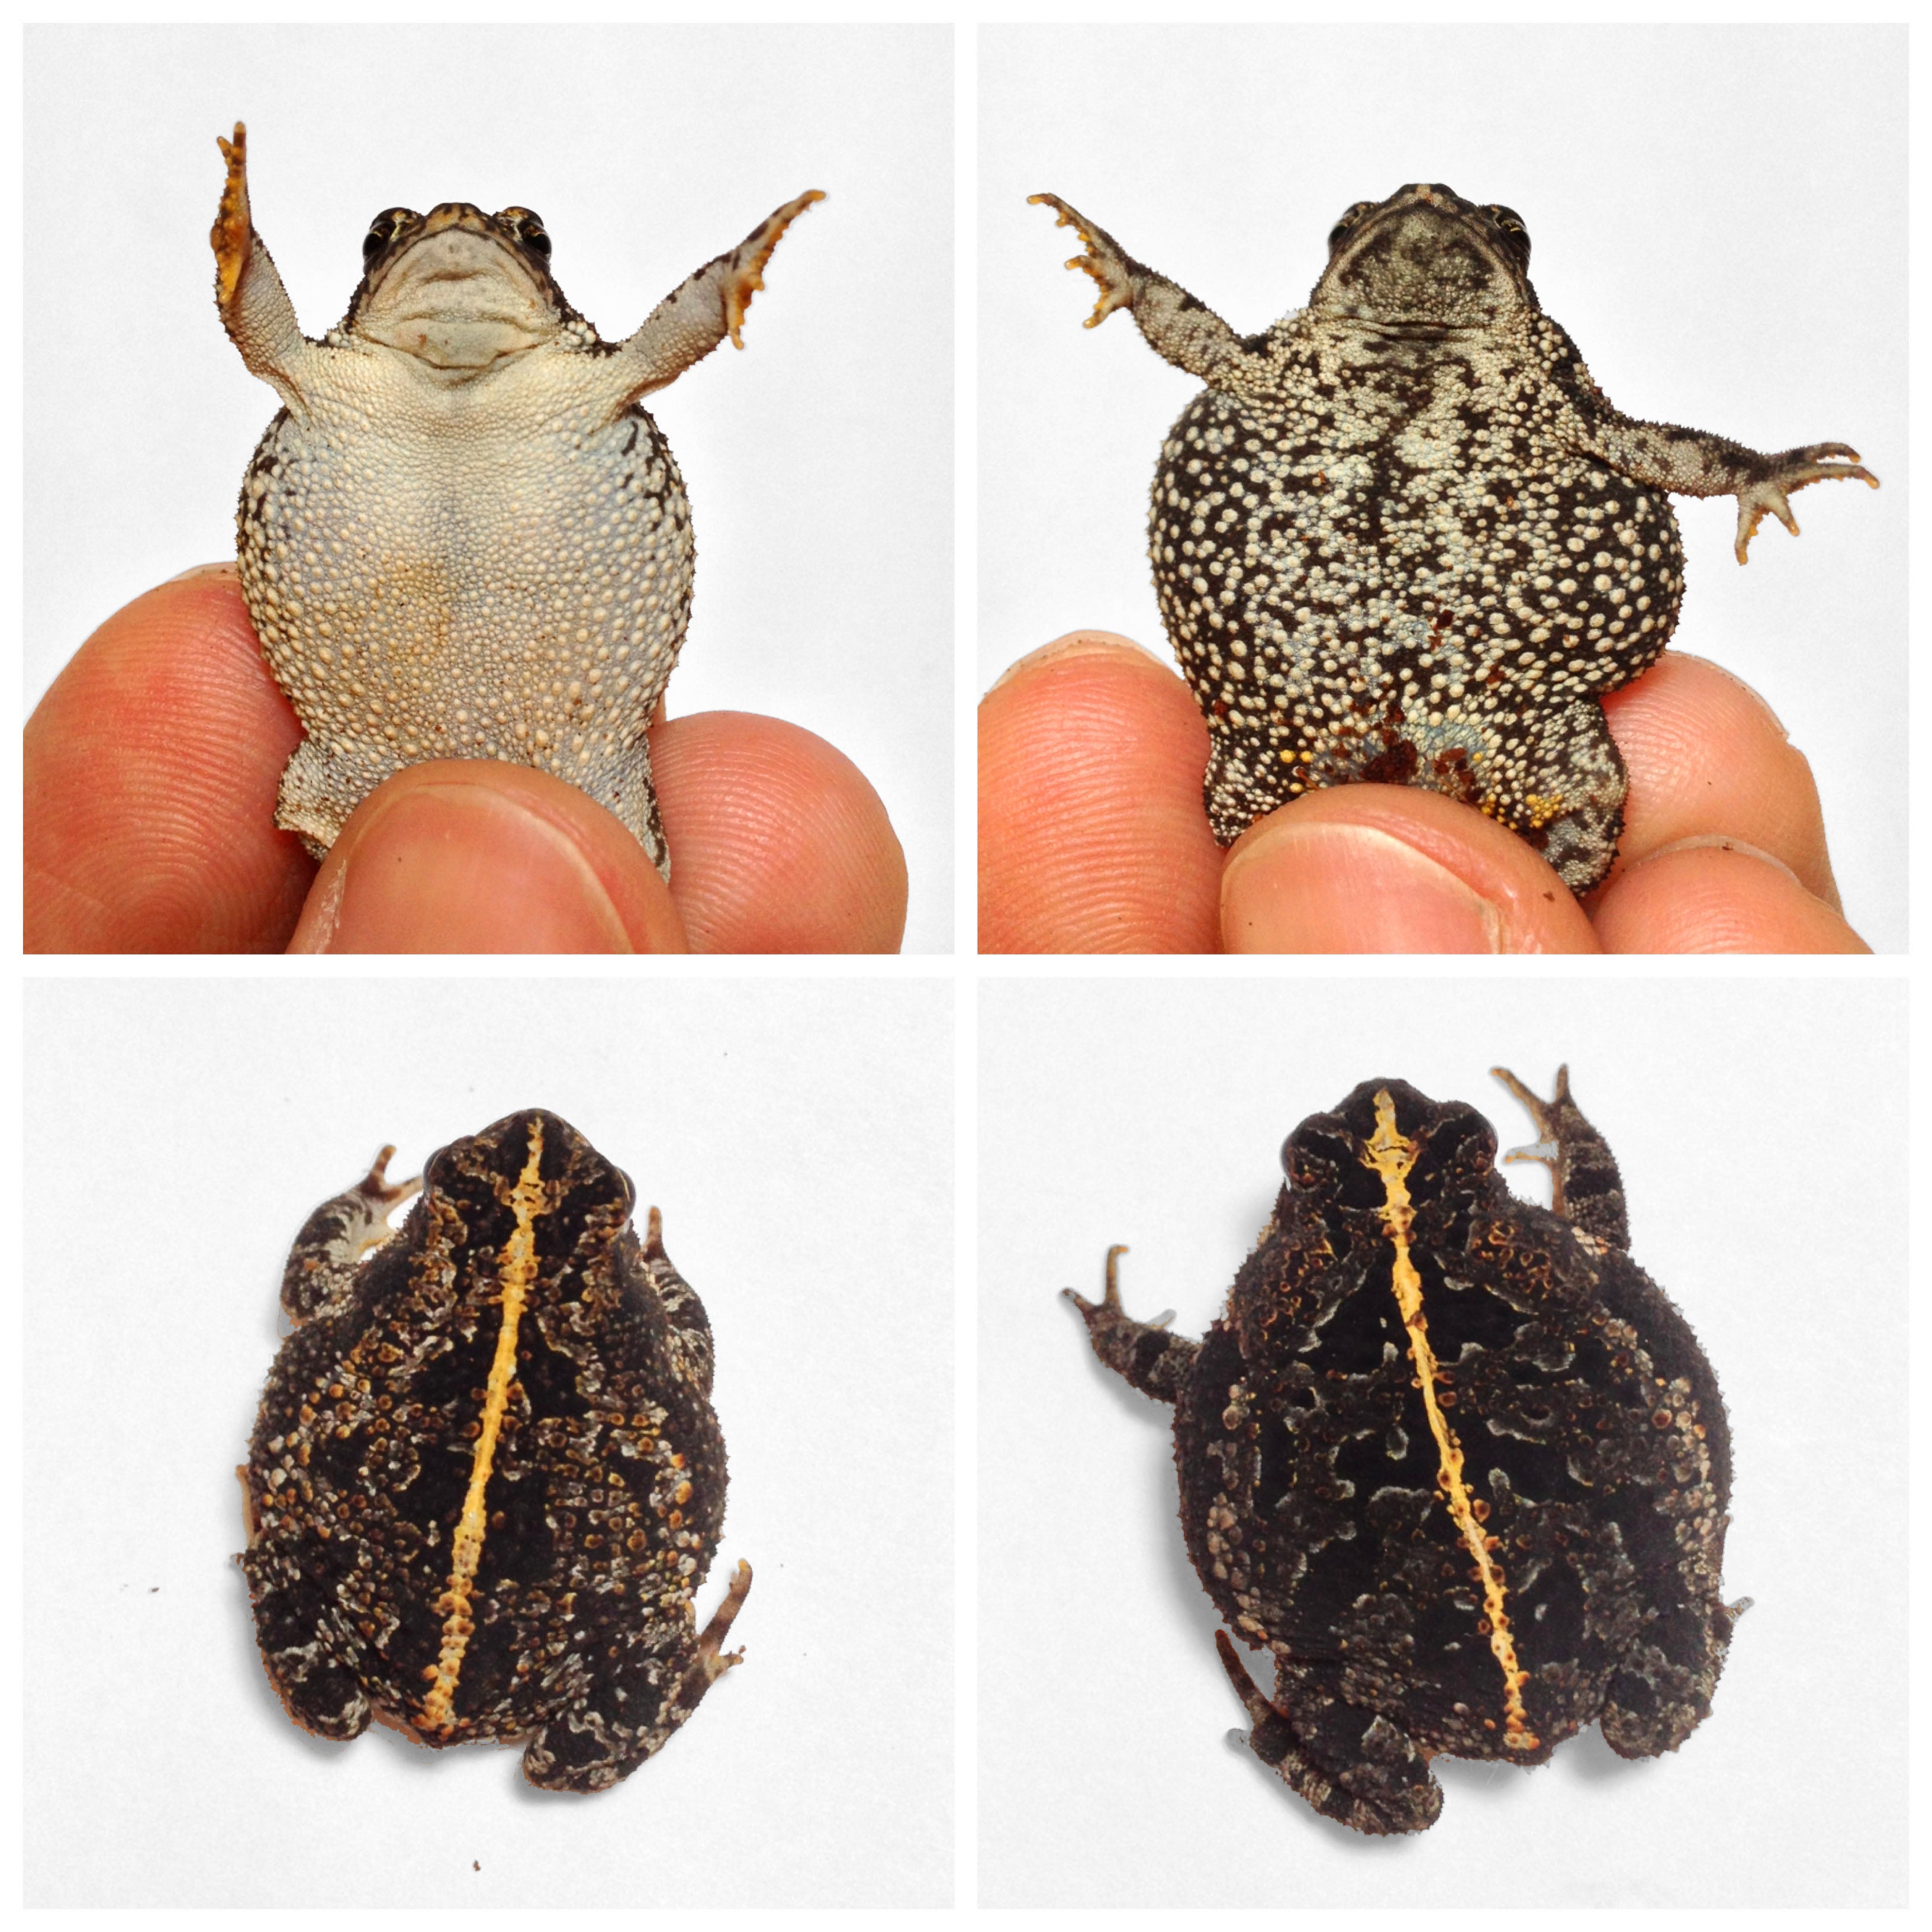 Cane Toad Controversy: Is ‘Toadzilla’ a Record-Breaker?